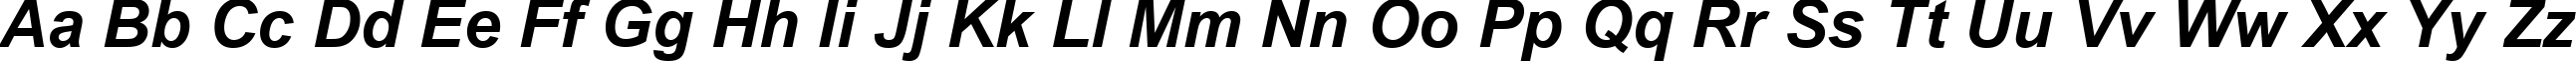 Пример написания английского алфавита шрифтом Arial CE Bold Italic